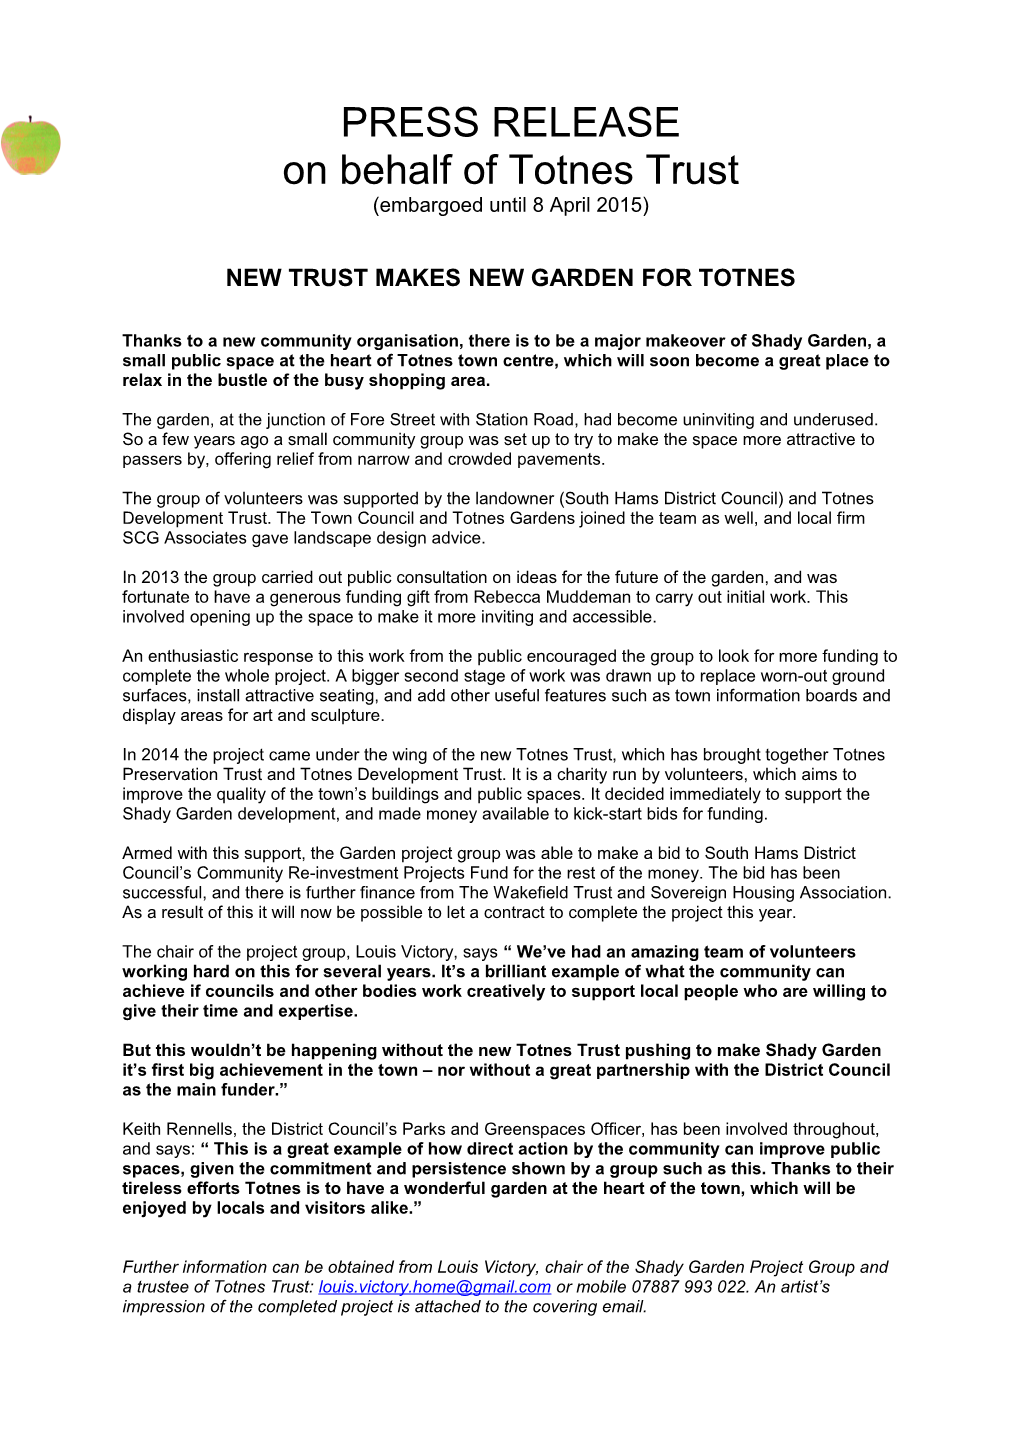 New Trust Makes New Garden for Totnes